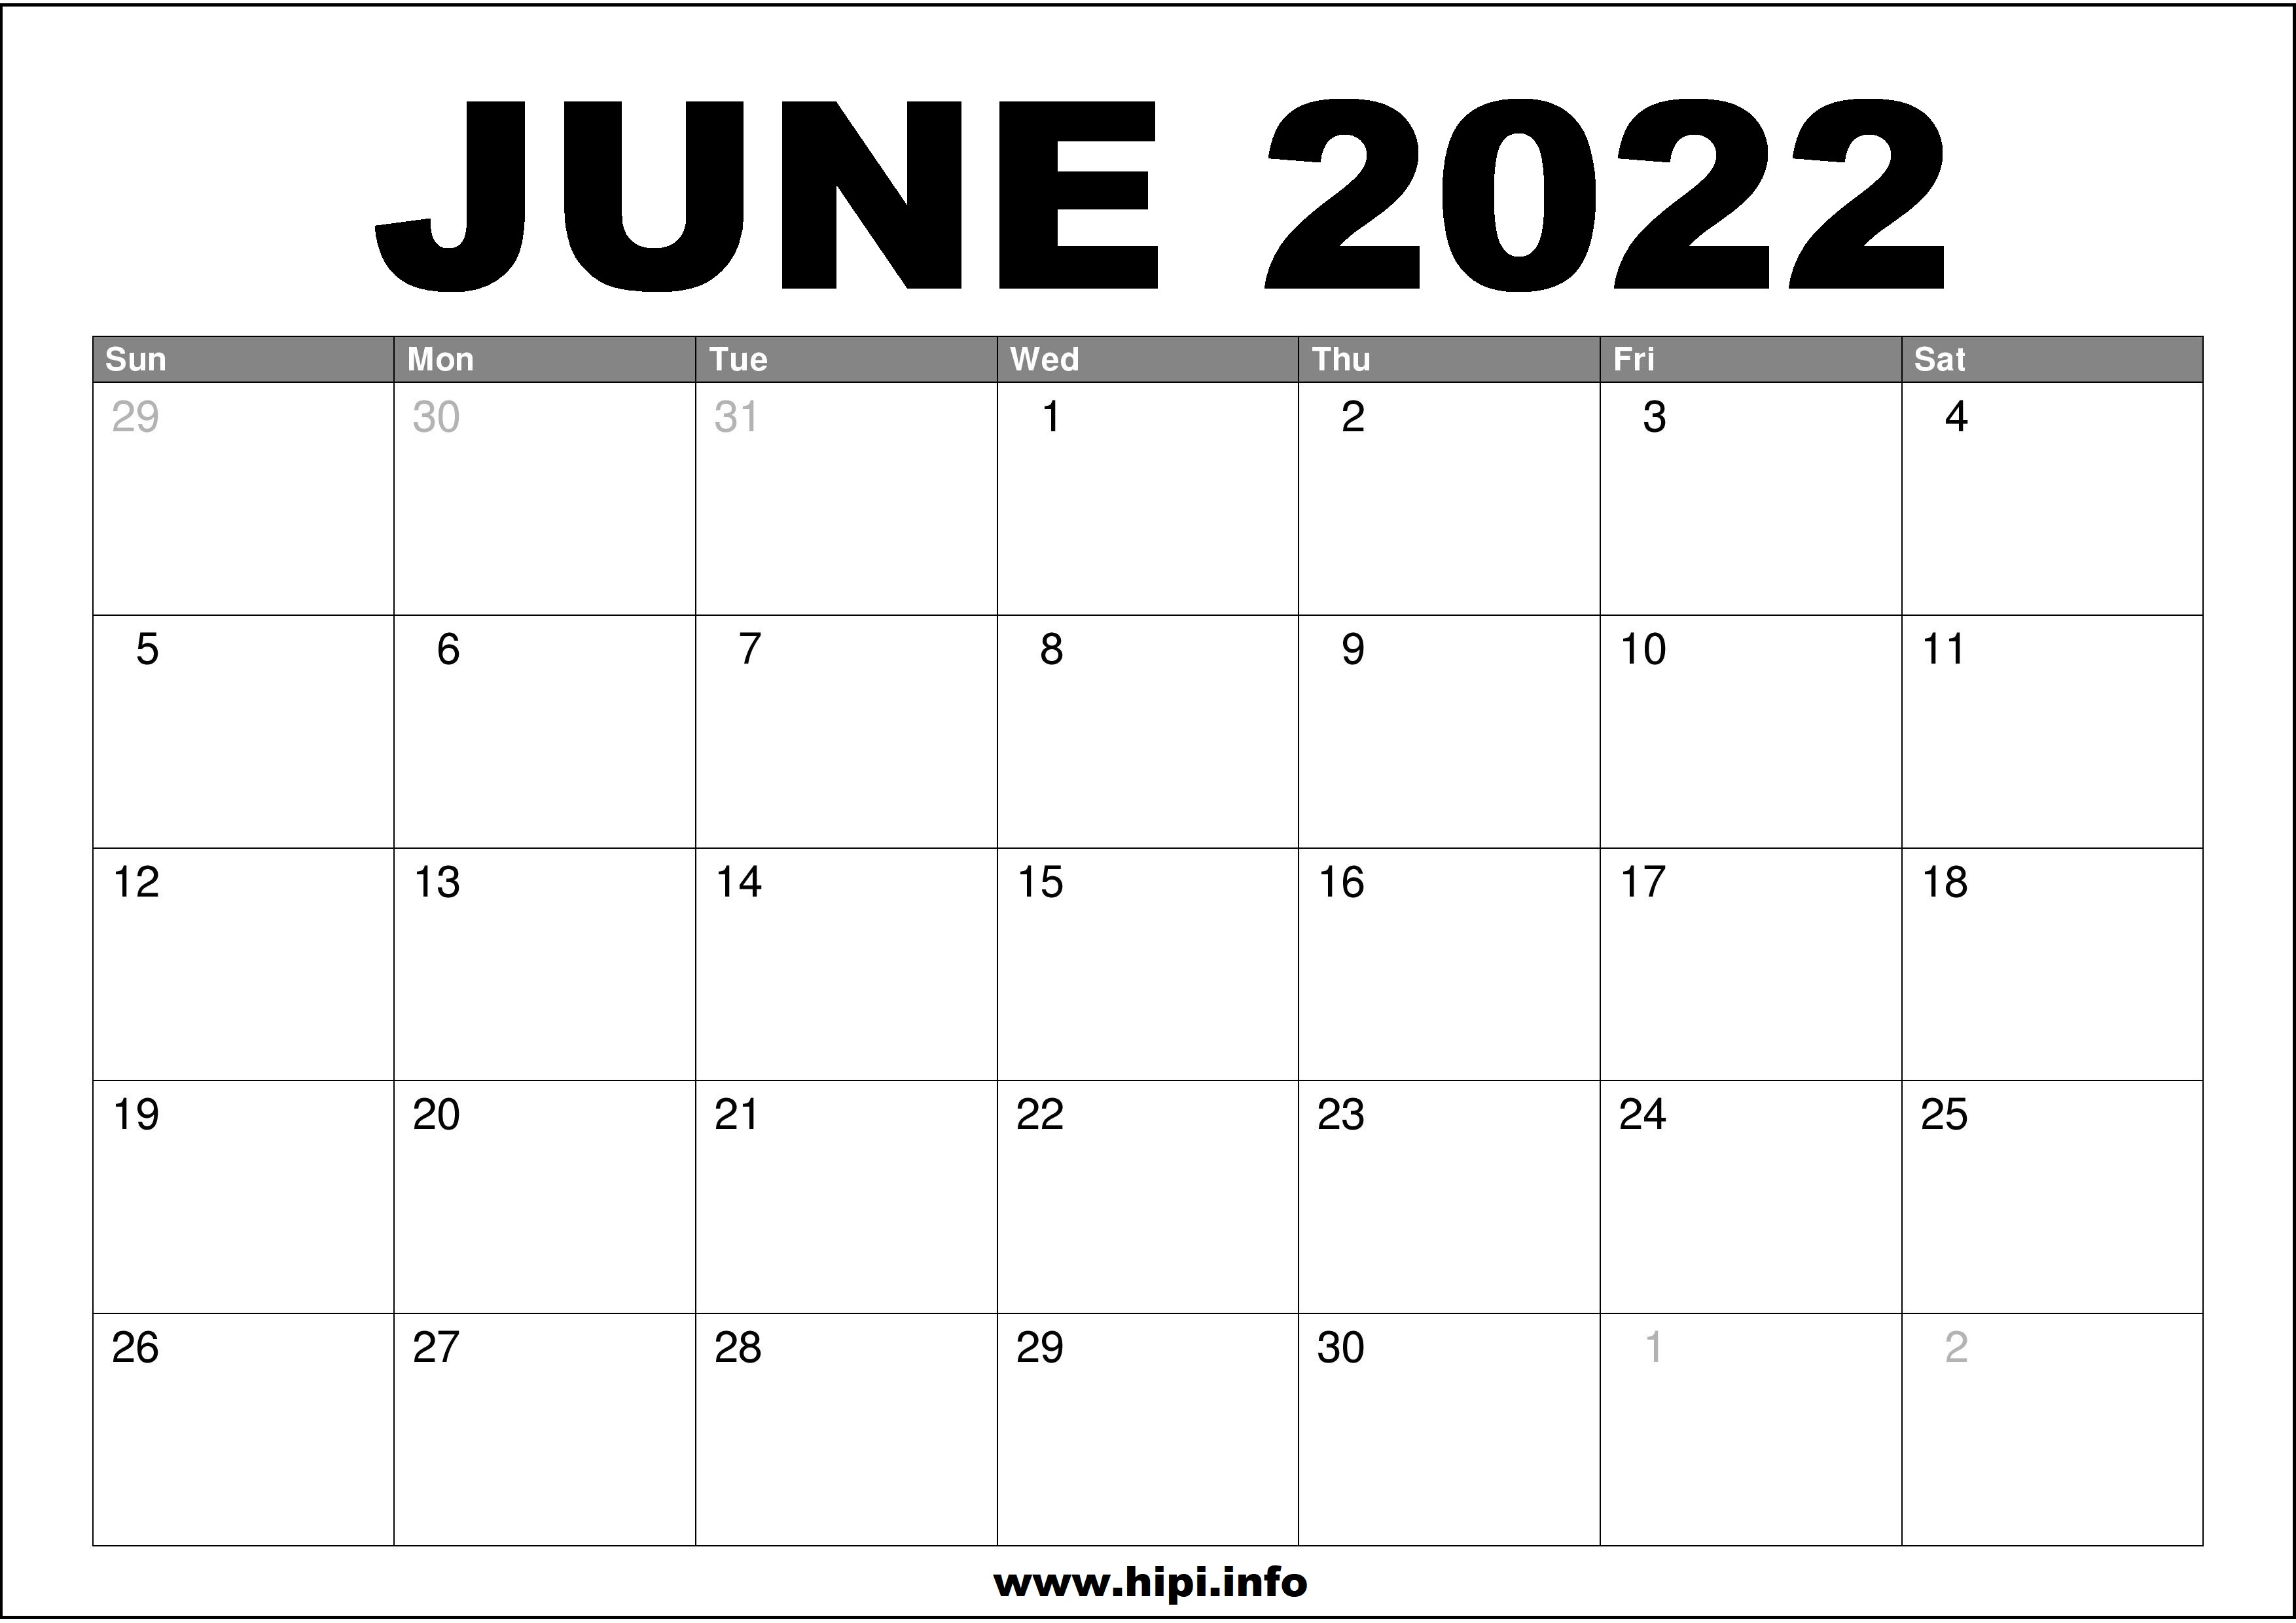 Printable Blank Calendar June 2022 June 2022 Calendar Printable Free - Hipi.info | Calendars Printable Free